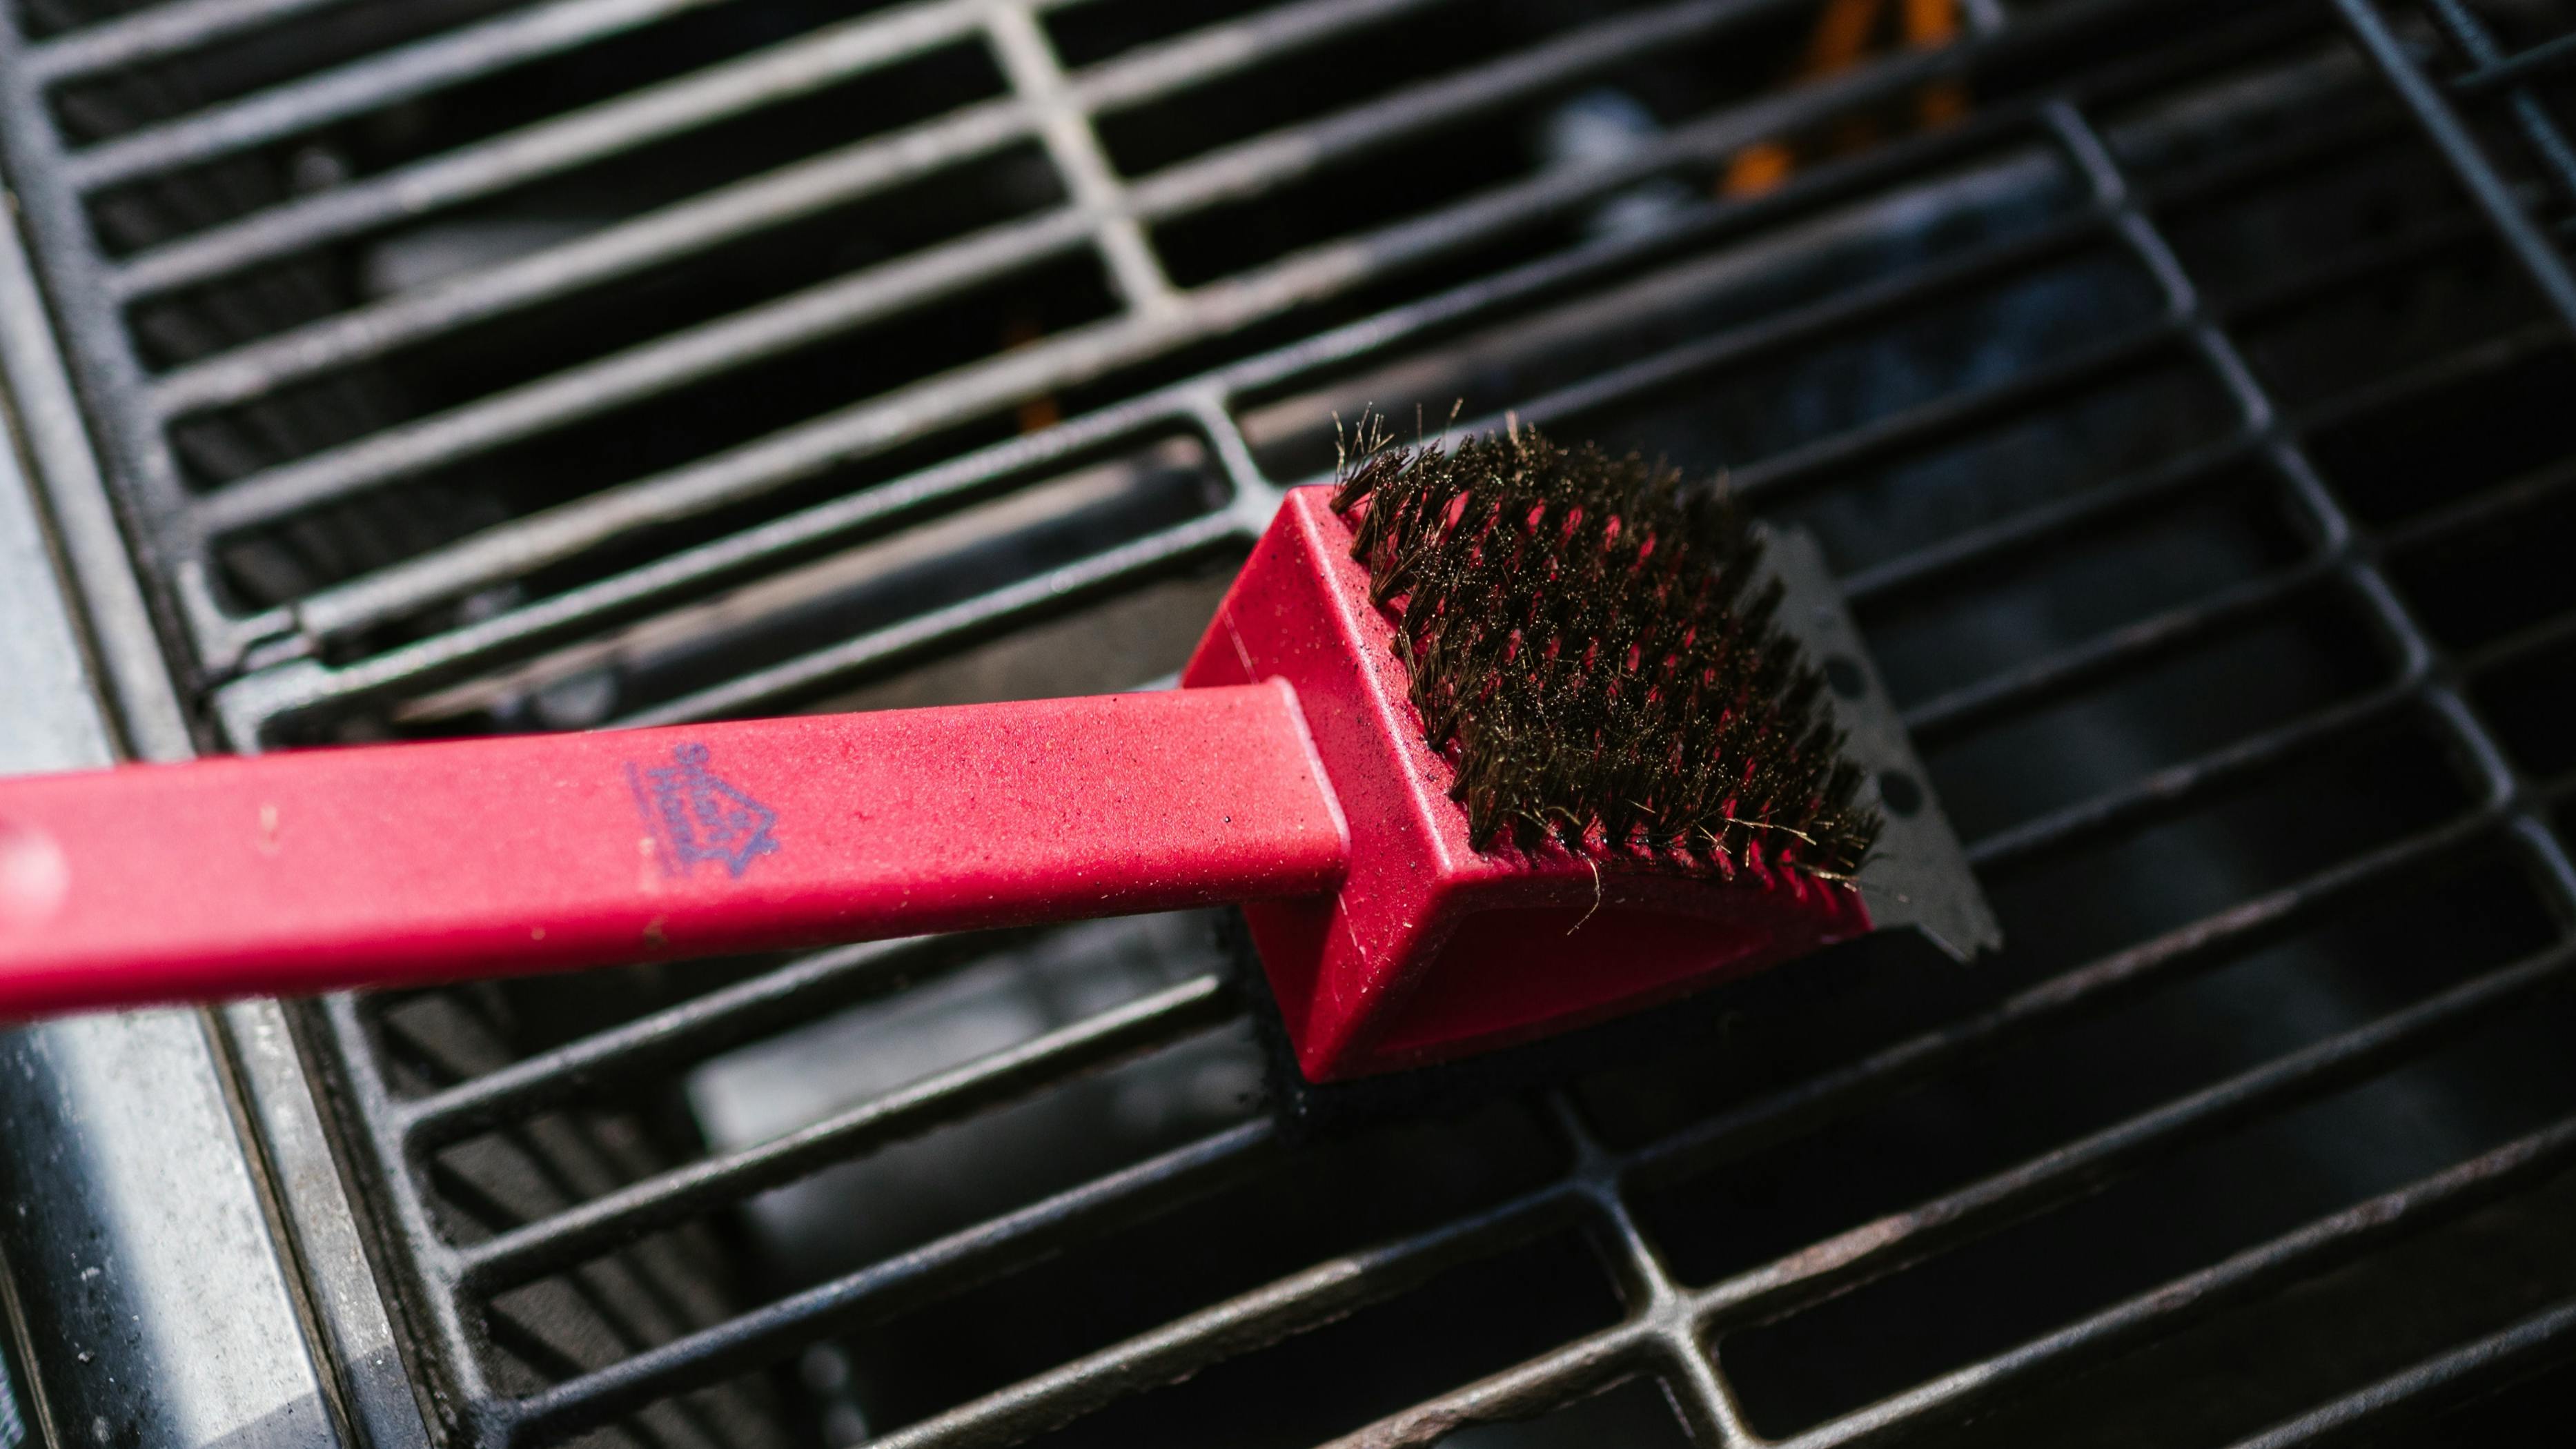 A brush scrubbing a grill. 